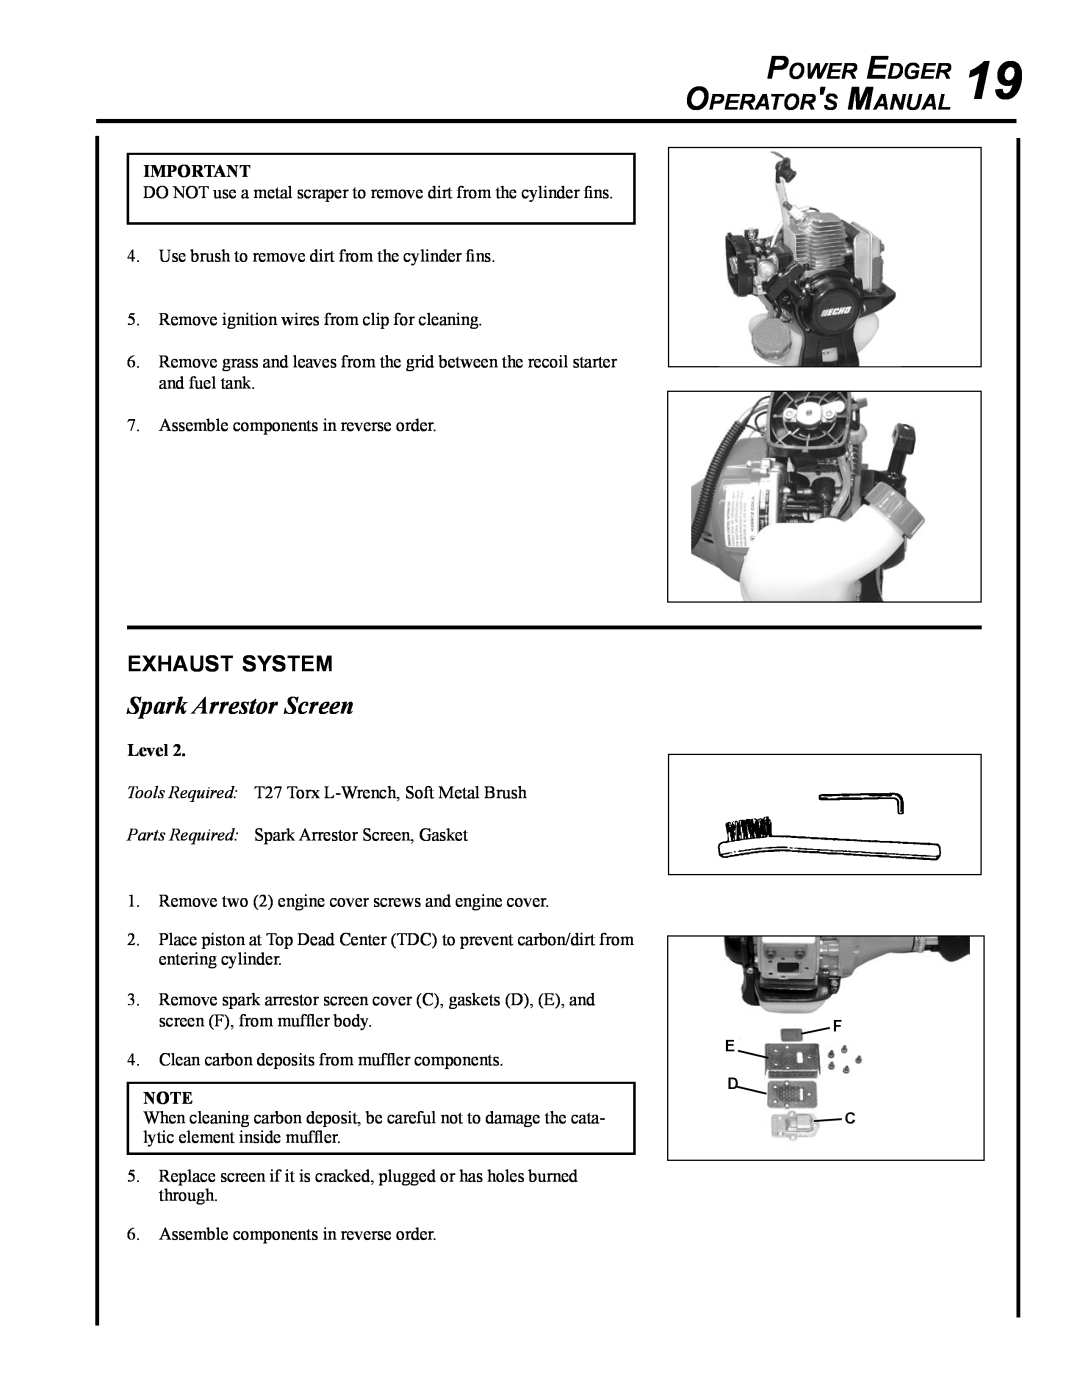 Echo PE-225 manual Spark Arrestor Screen, exhaust system, Power Edger, Operators Manual, Level 